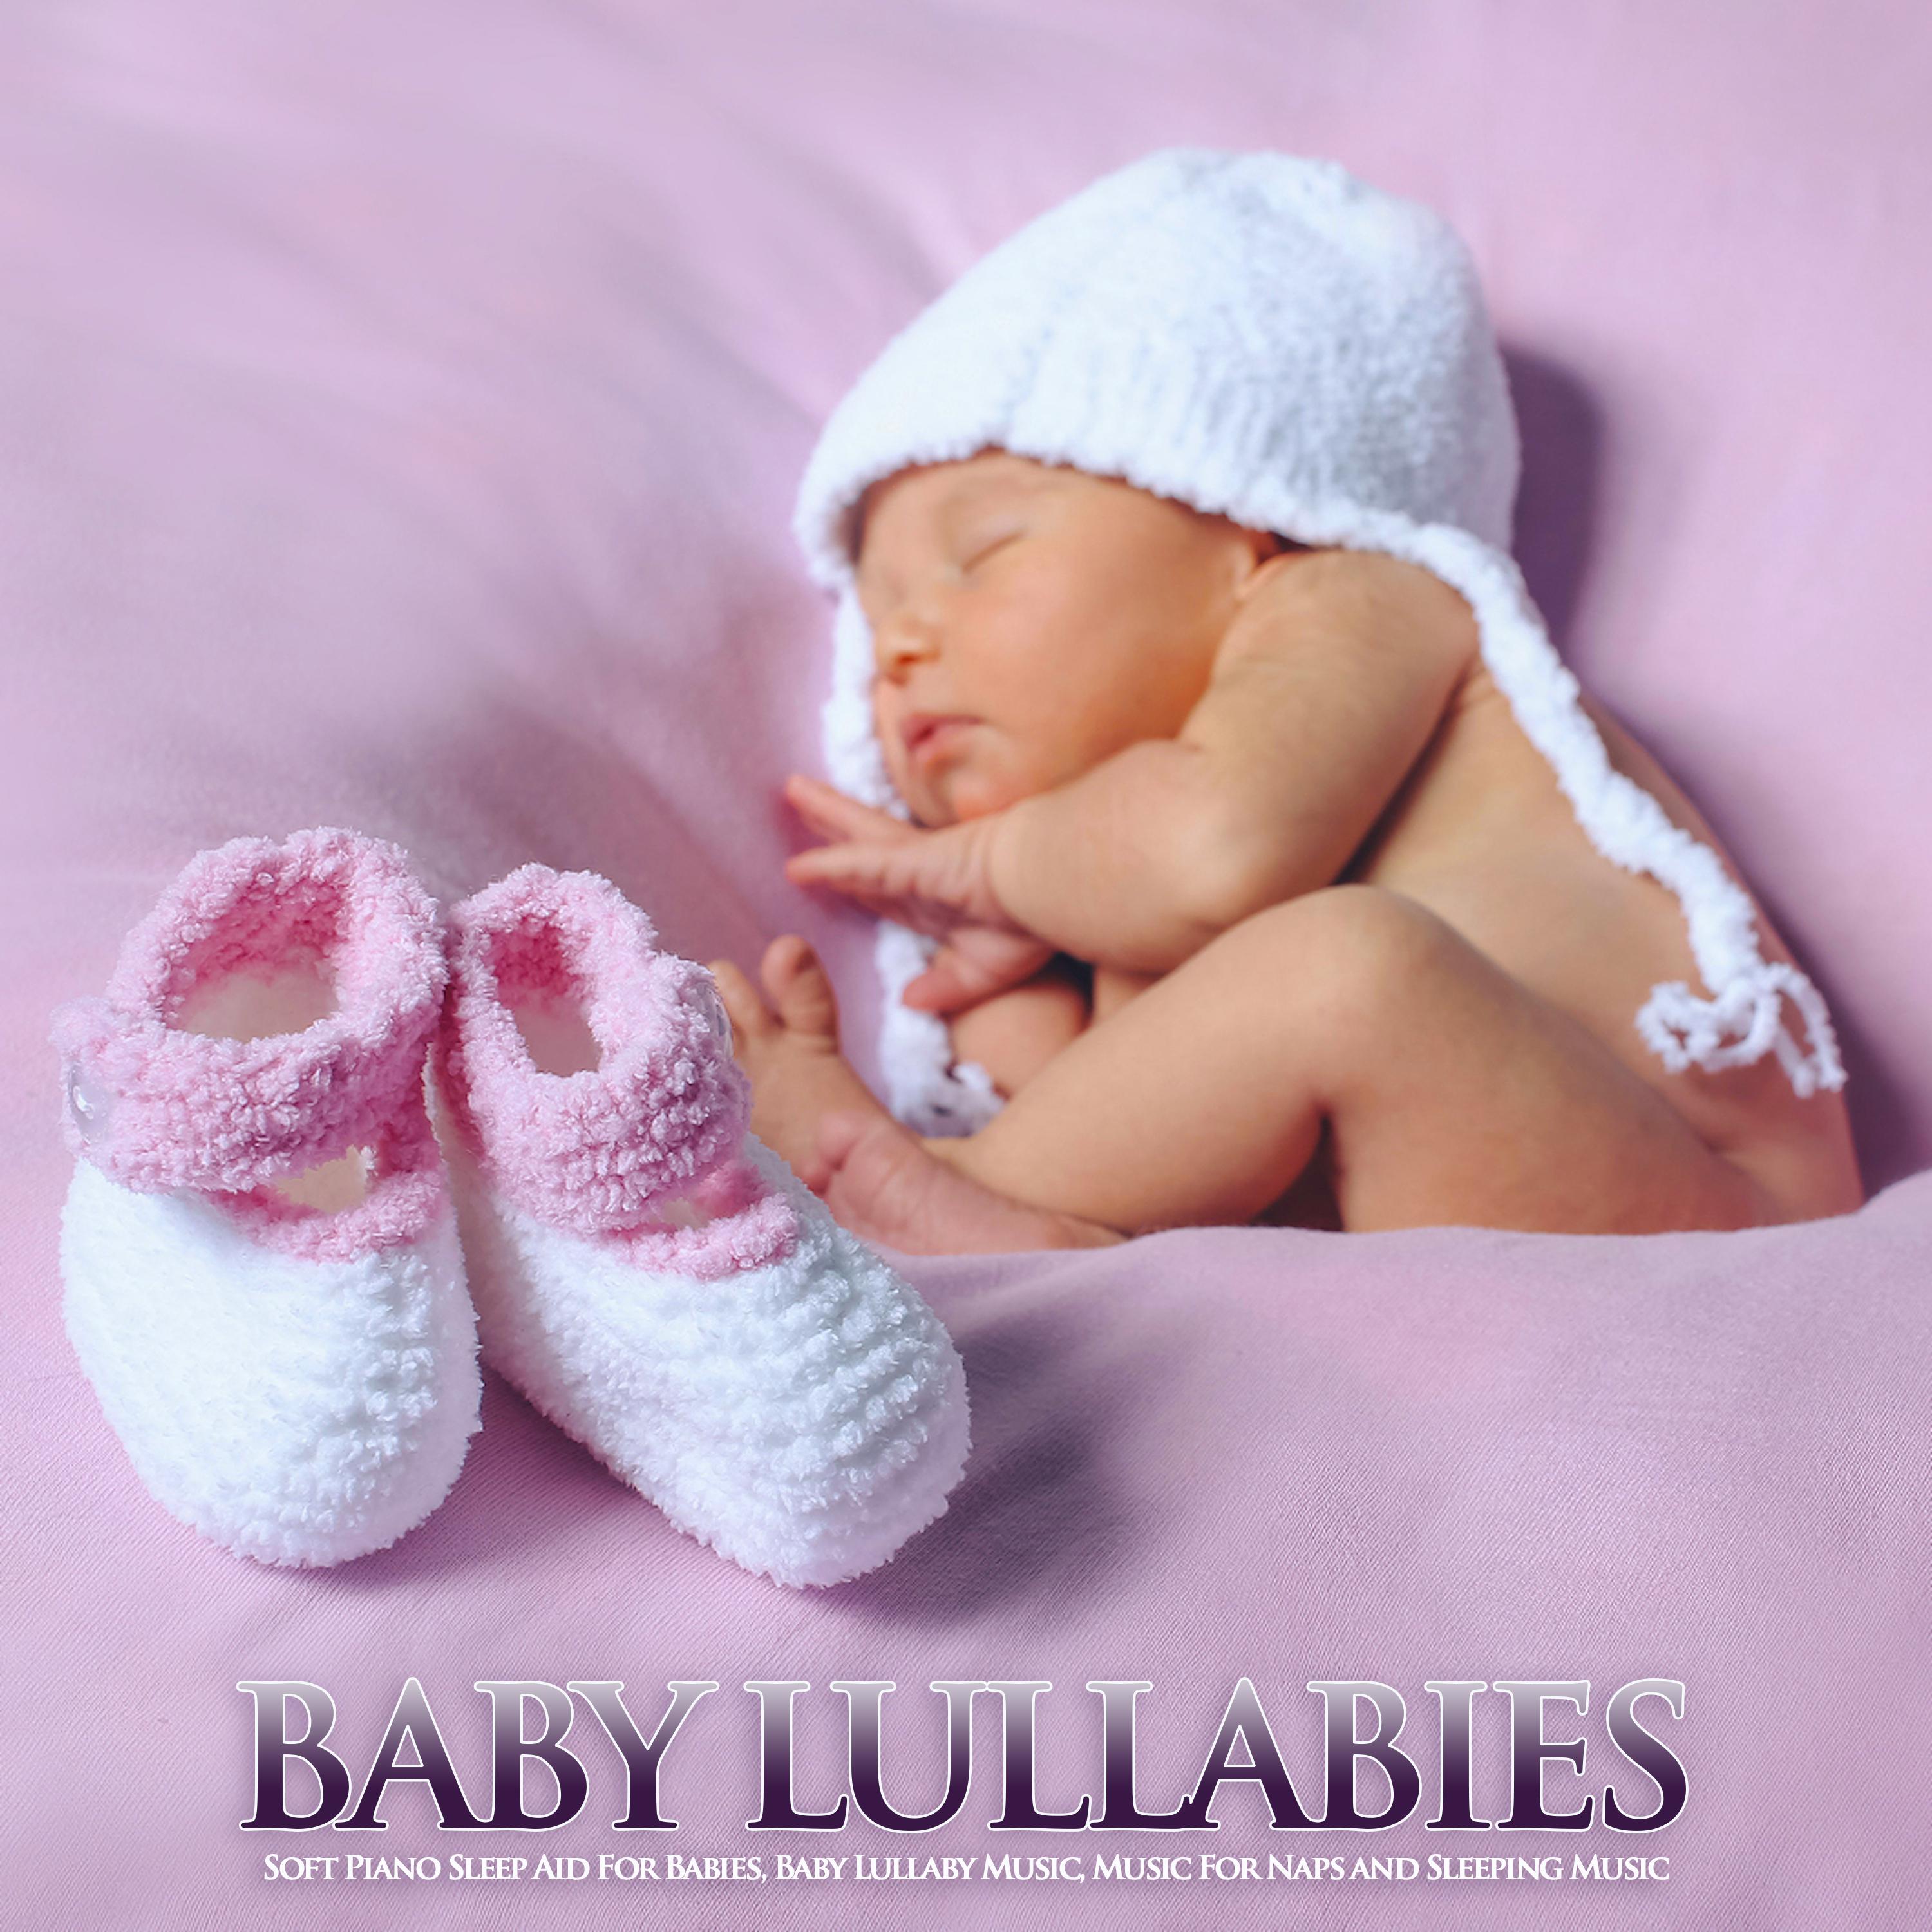 Baby Lullabies: Soft Piano Sleep Aid For Babies, Baby Lullaby Music, Music For Naps and Sleeping Music